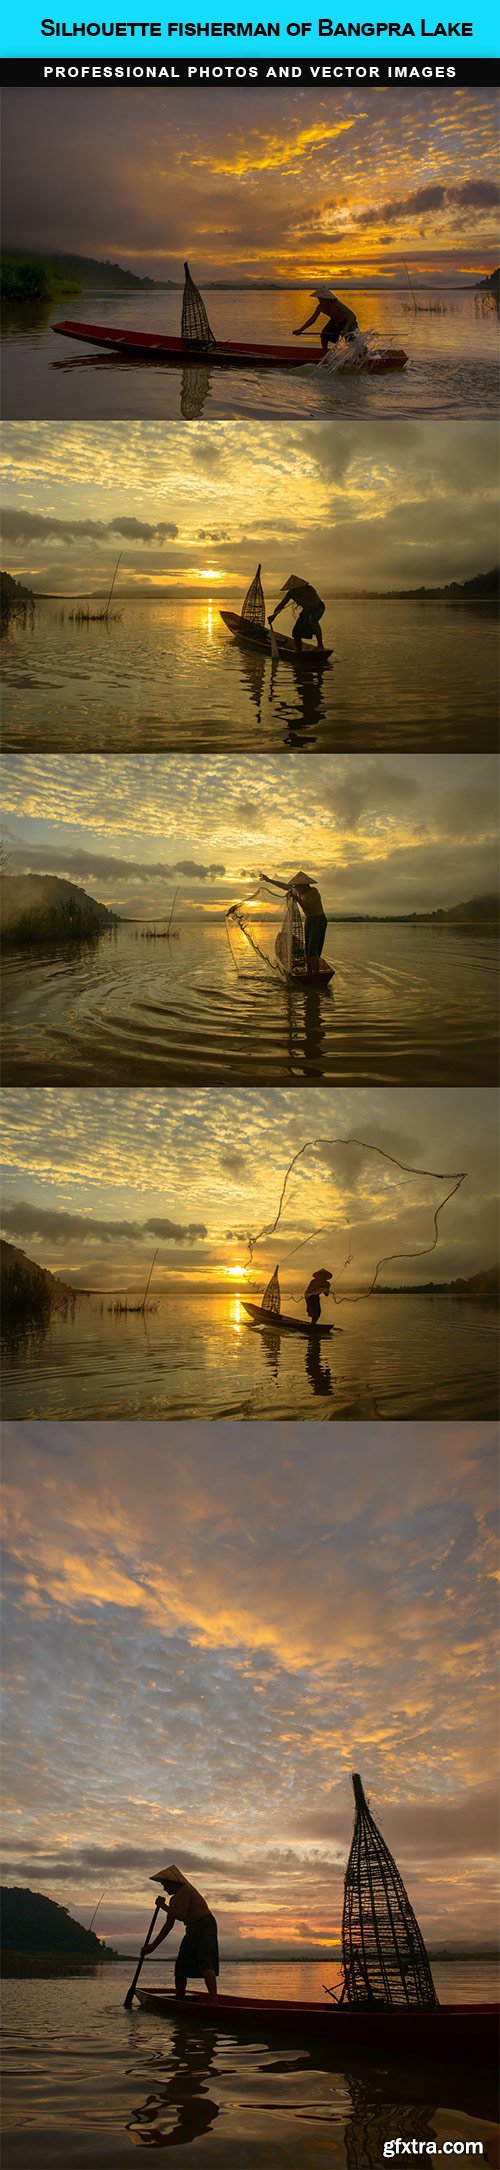 Silhouette fisherman of Bangpra Lake